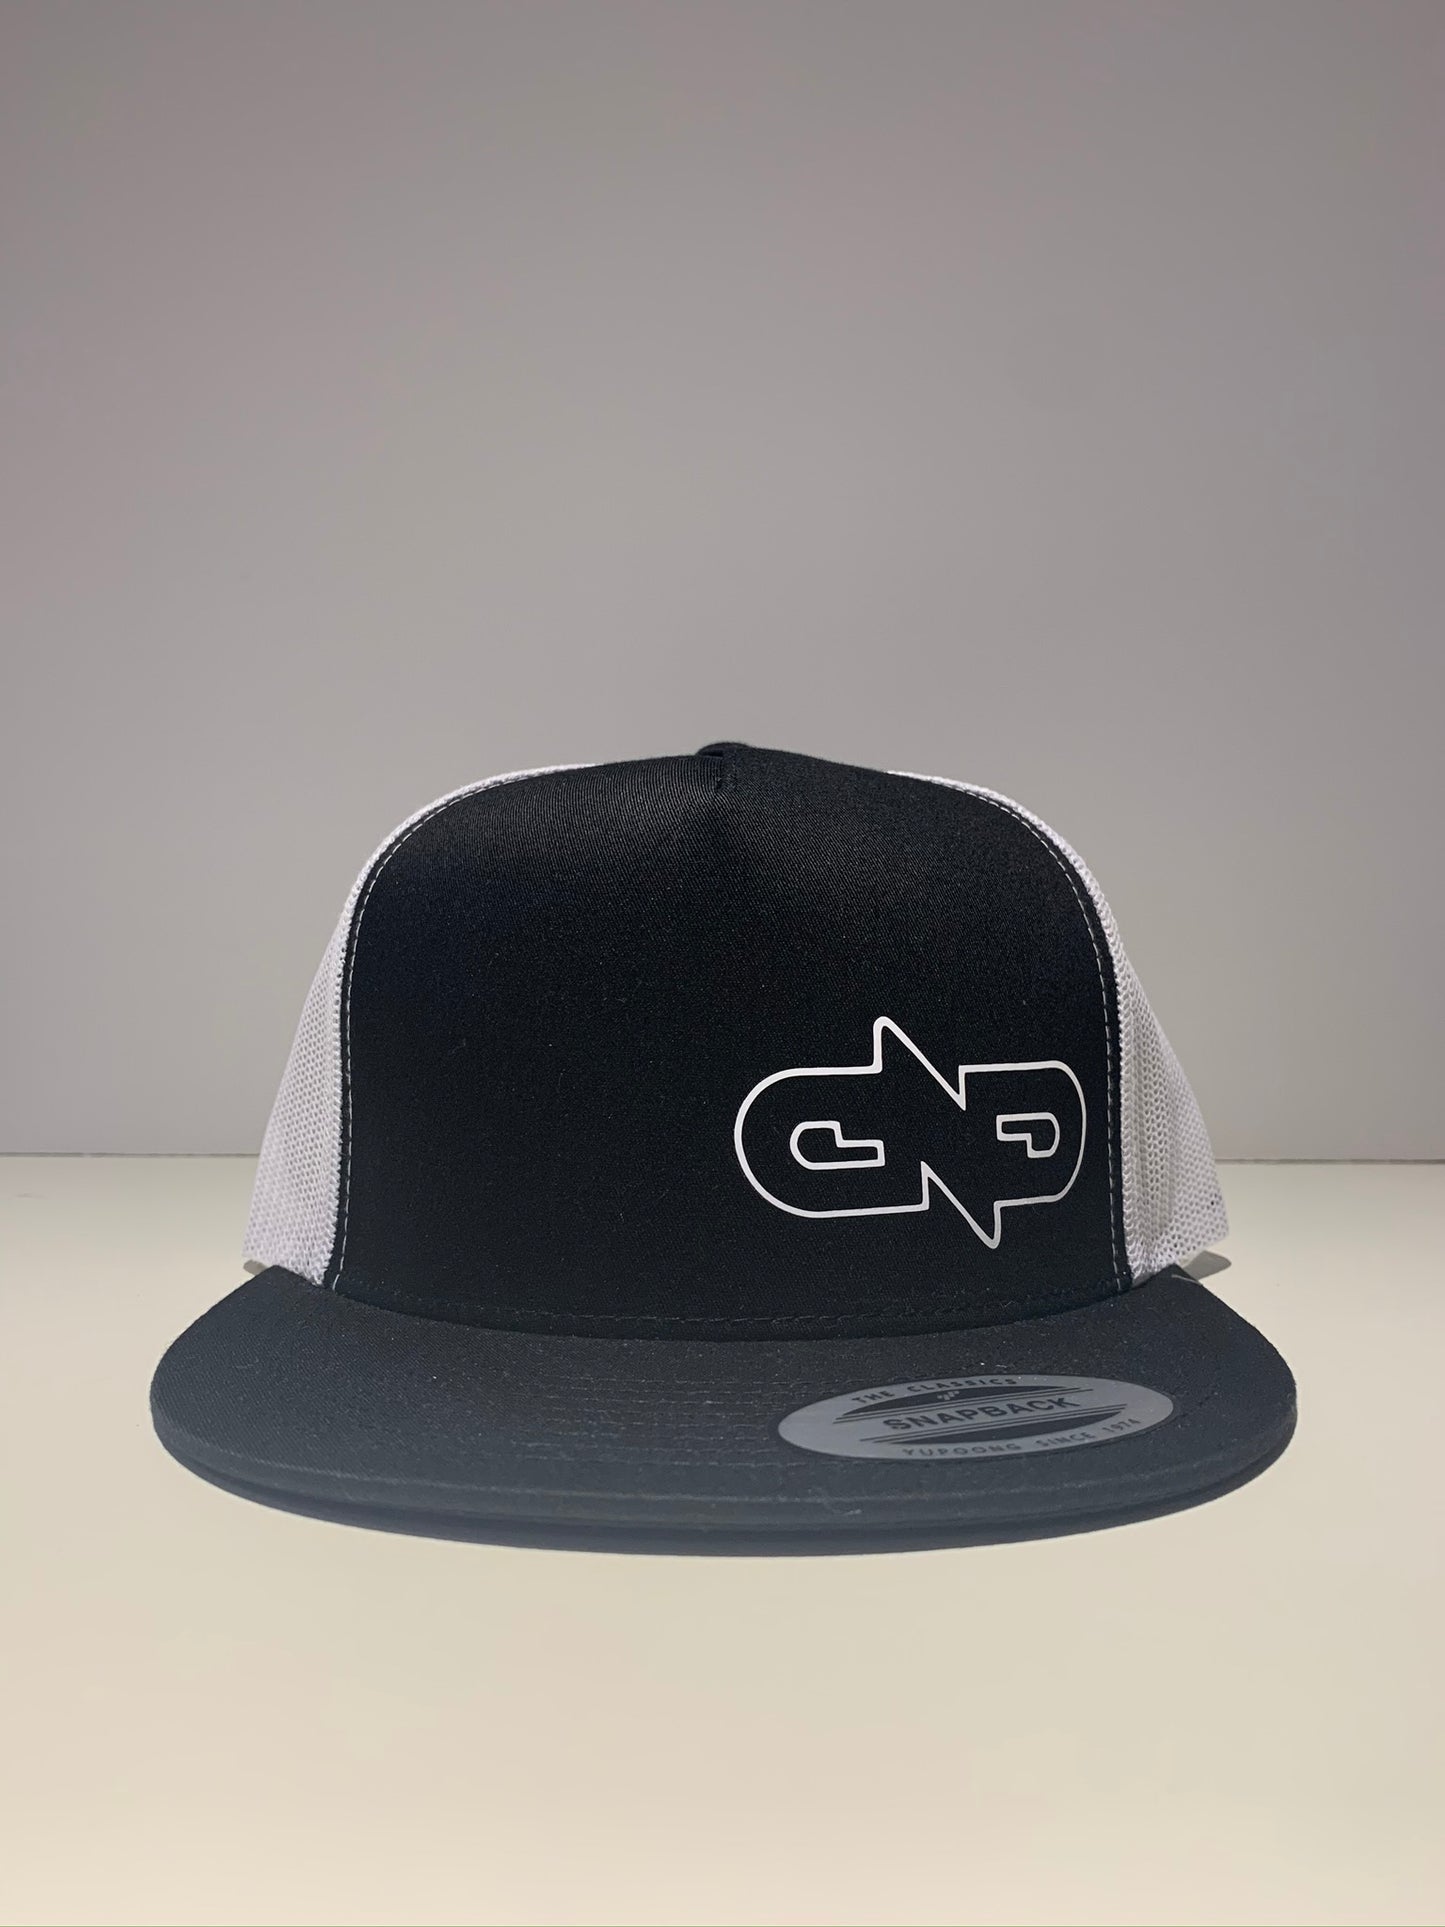 CND Shop Hats